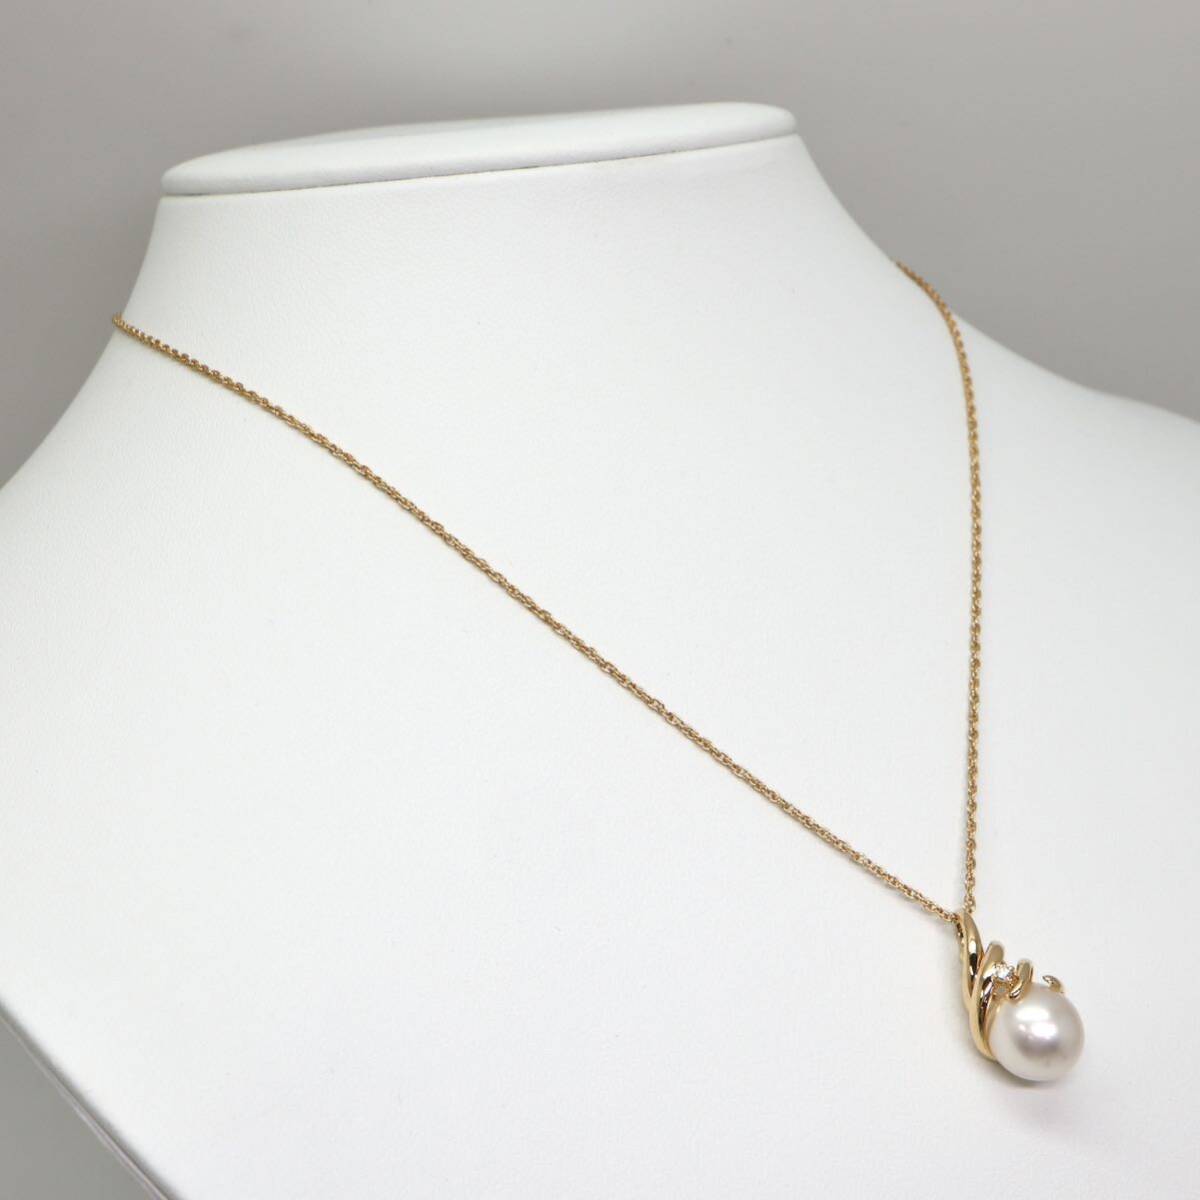 高品質!!TASAKI(田崎真珠)◆K18本真珠ネックレス◆A 約5.5g 約38.0cm パール pearl necklace EC6/EC6の画像3